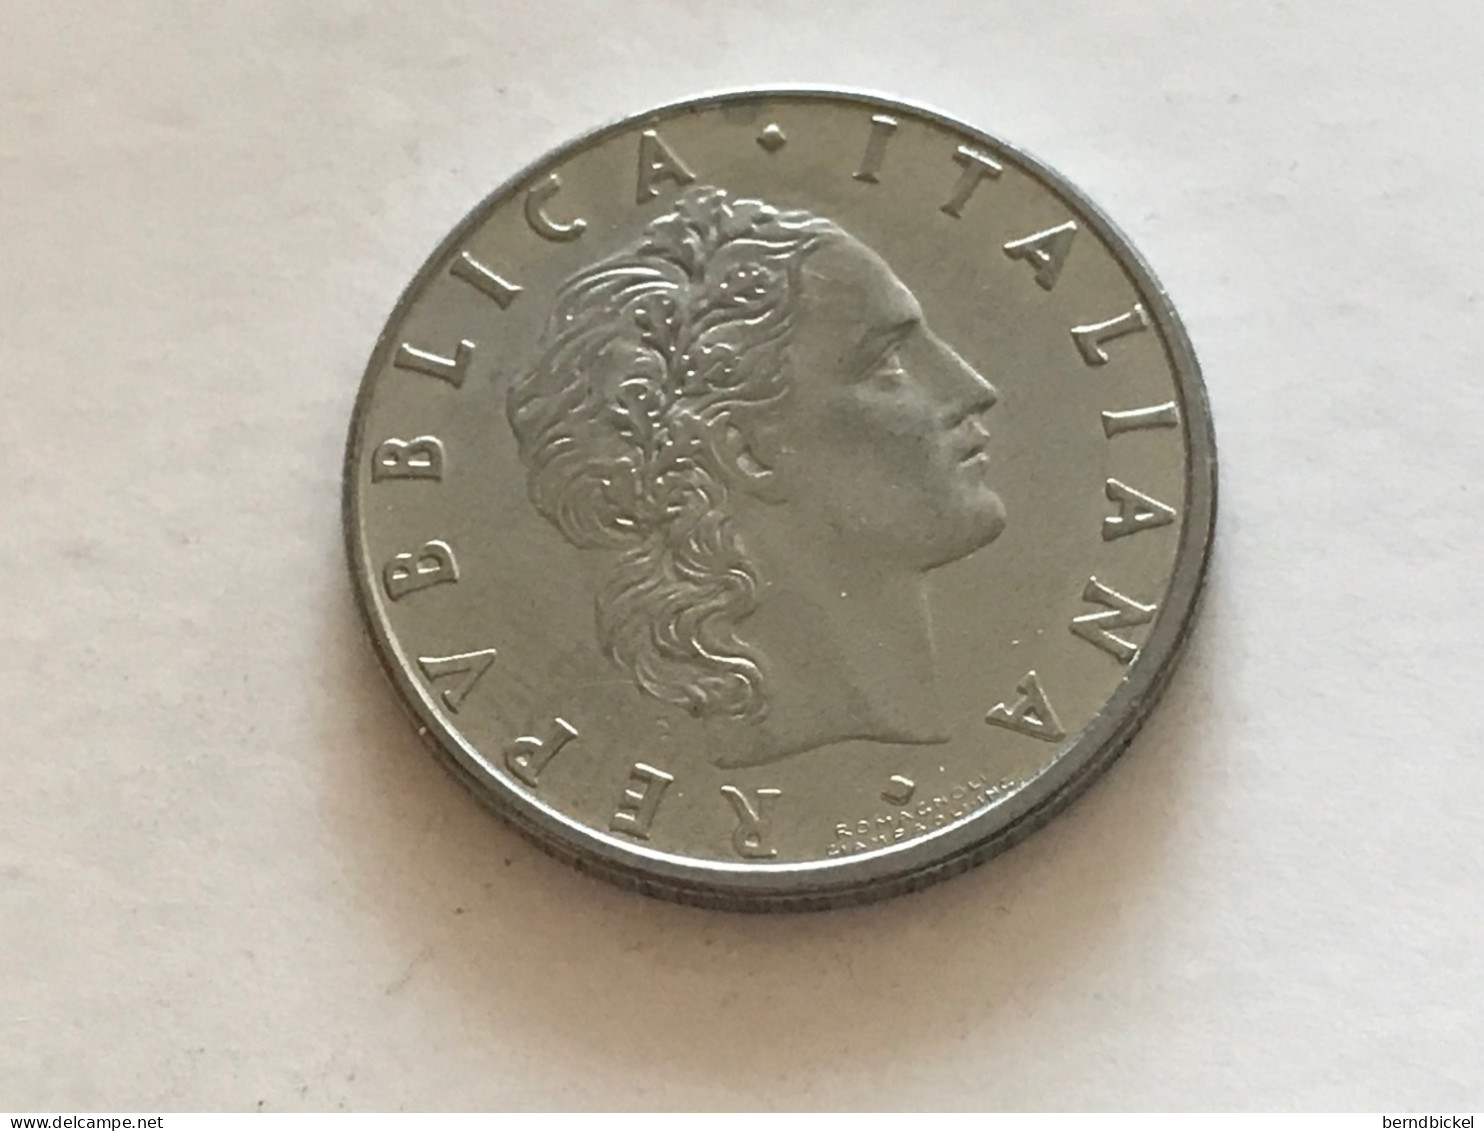 Münze Münzen Umlaufmünze Italien 50 Lire 1988 - 50 Lire